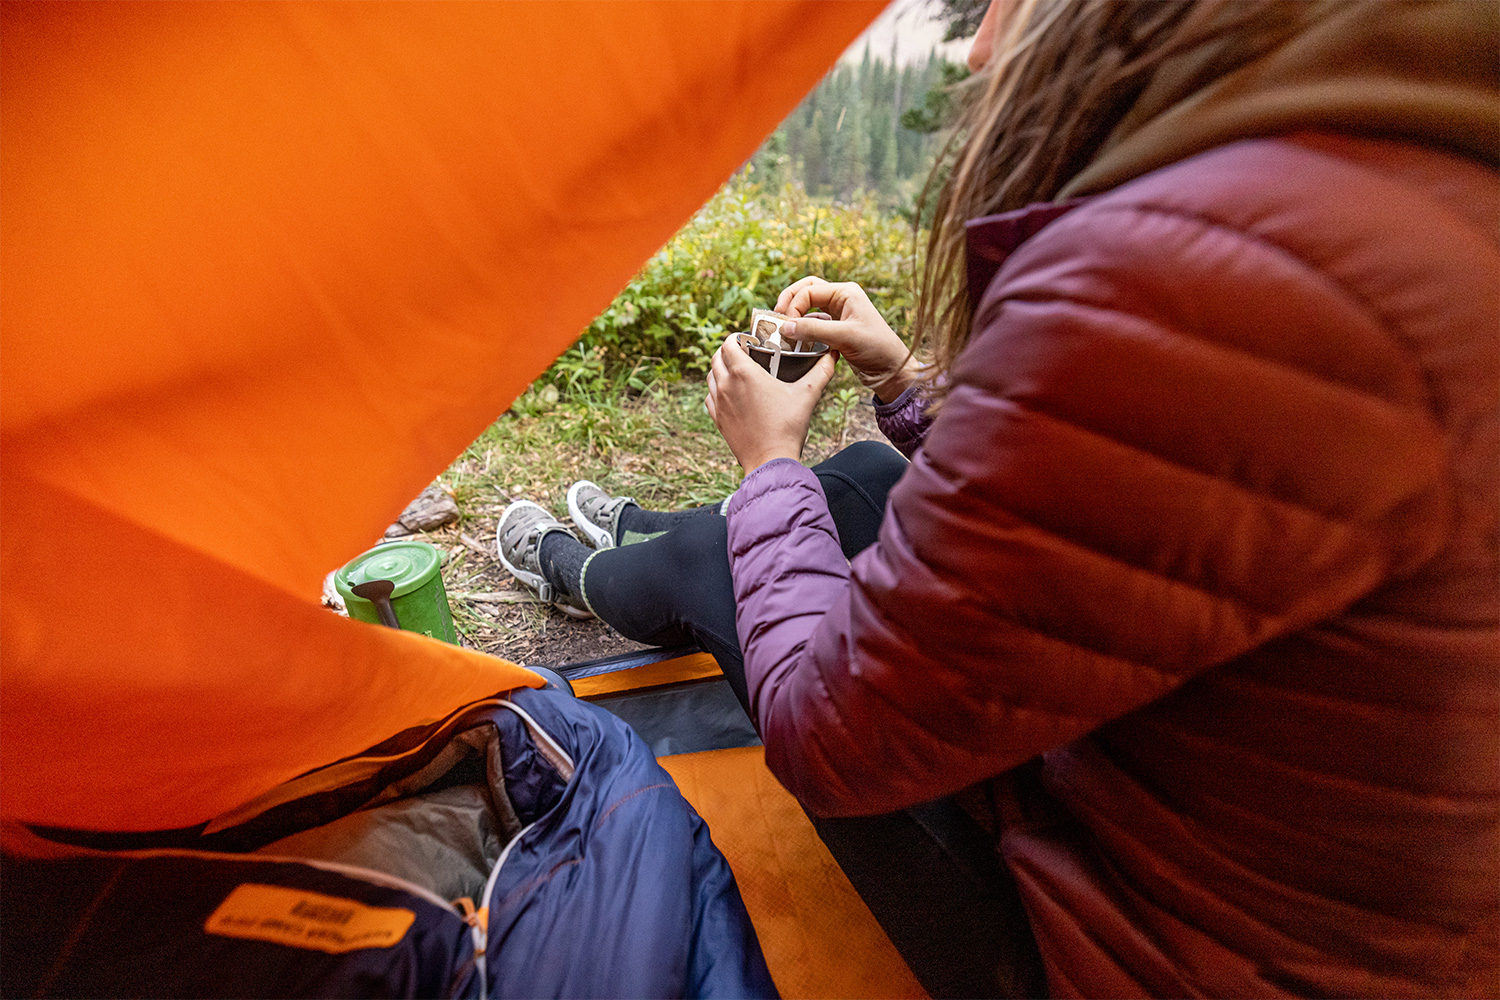 Hiker making coffee at camp while wearing the Oboz Whakata Trail sandal.